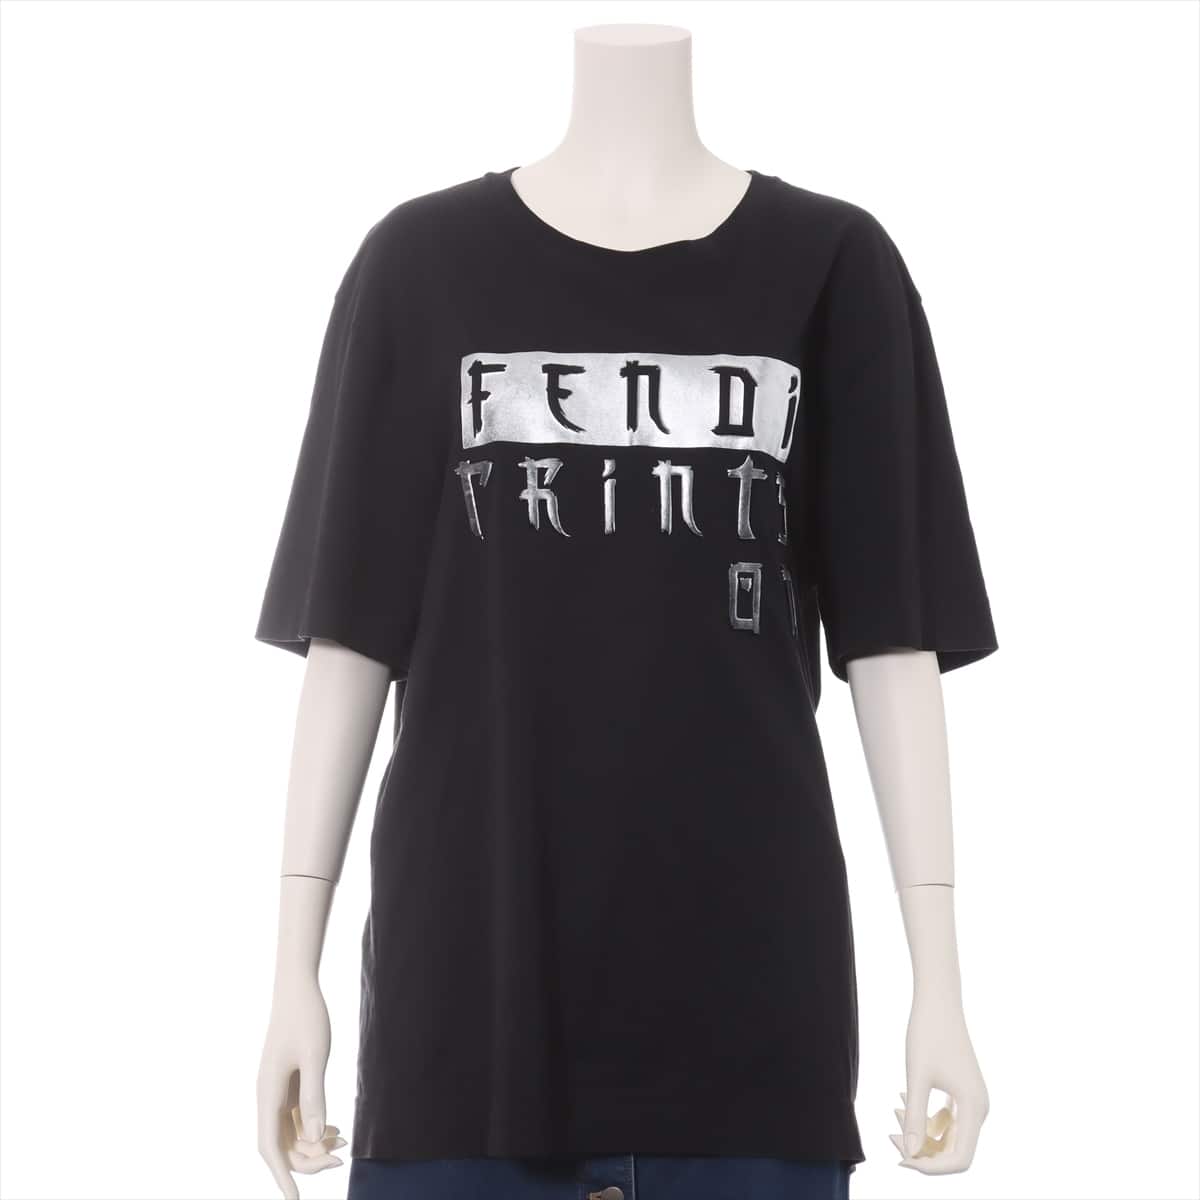 Fendi Cotton T-shirt M Ladies' Black  PRINTS ON Nicky Minaj There are threads, perfume leftovers, and holes